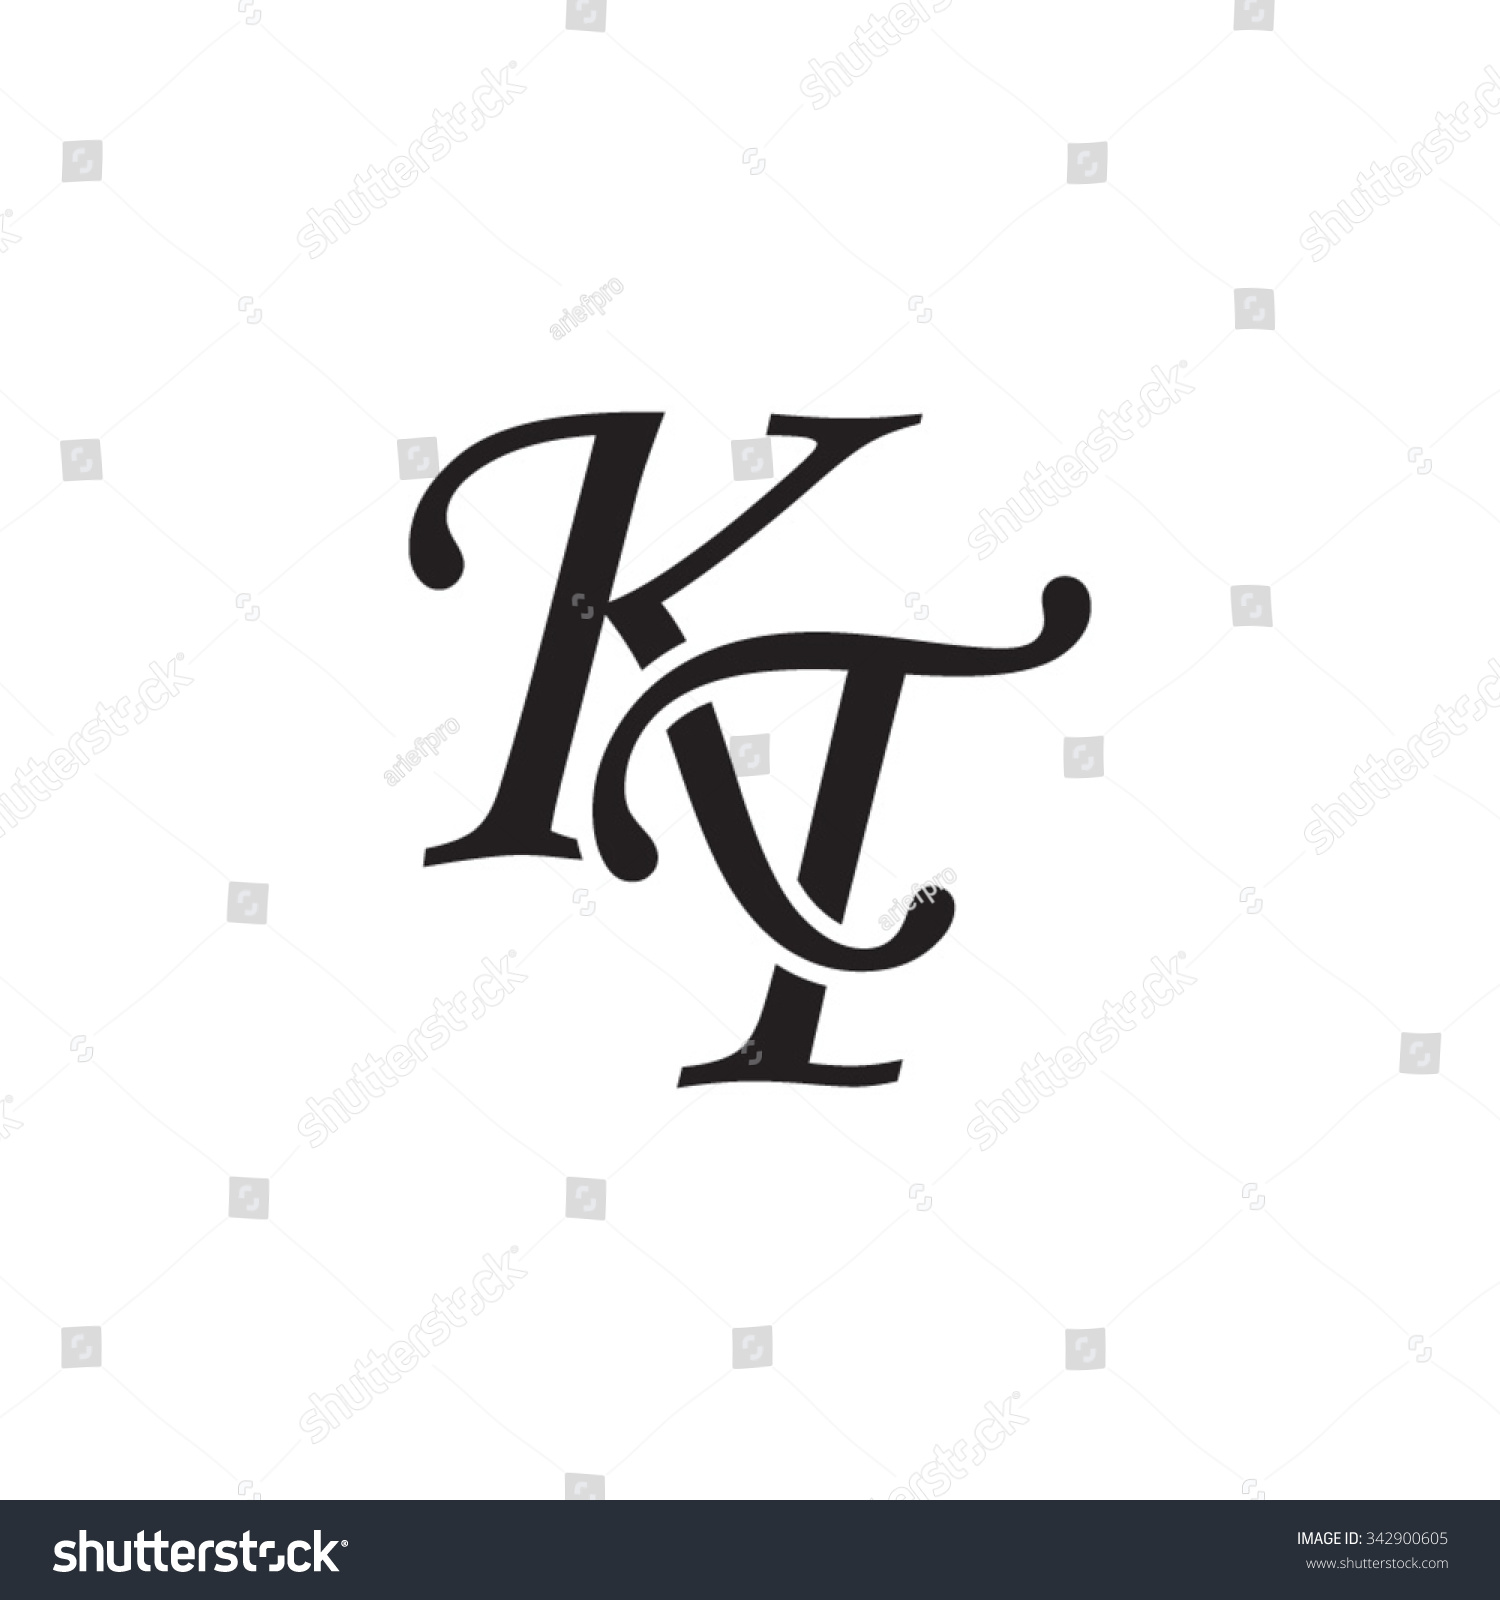 Kt Initial Monogram Logo Stock Vector Royalty Free